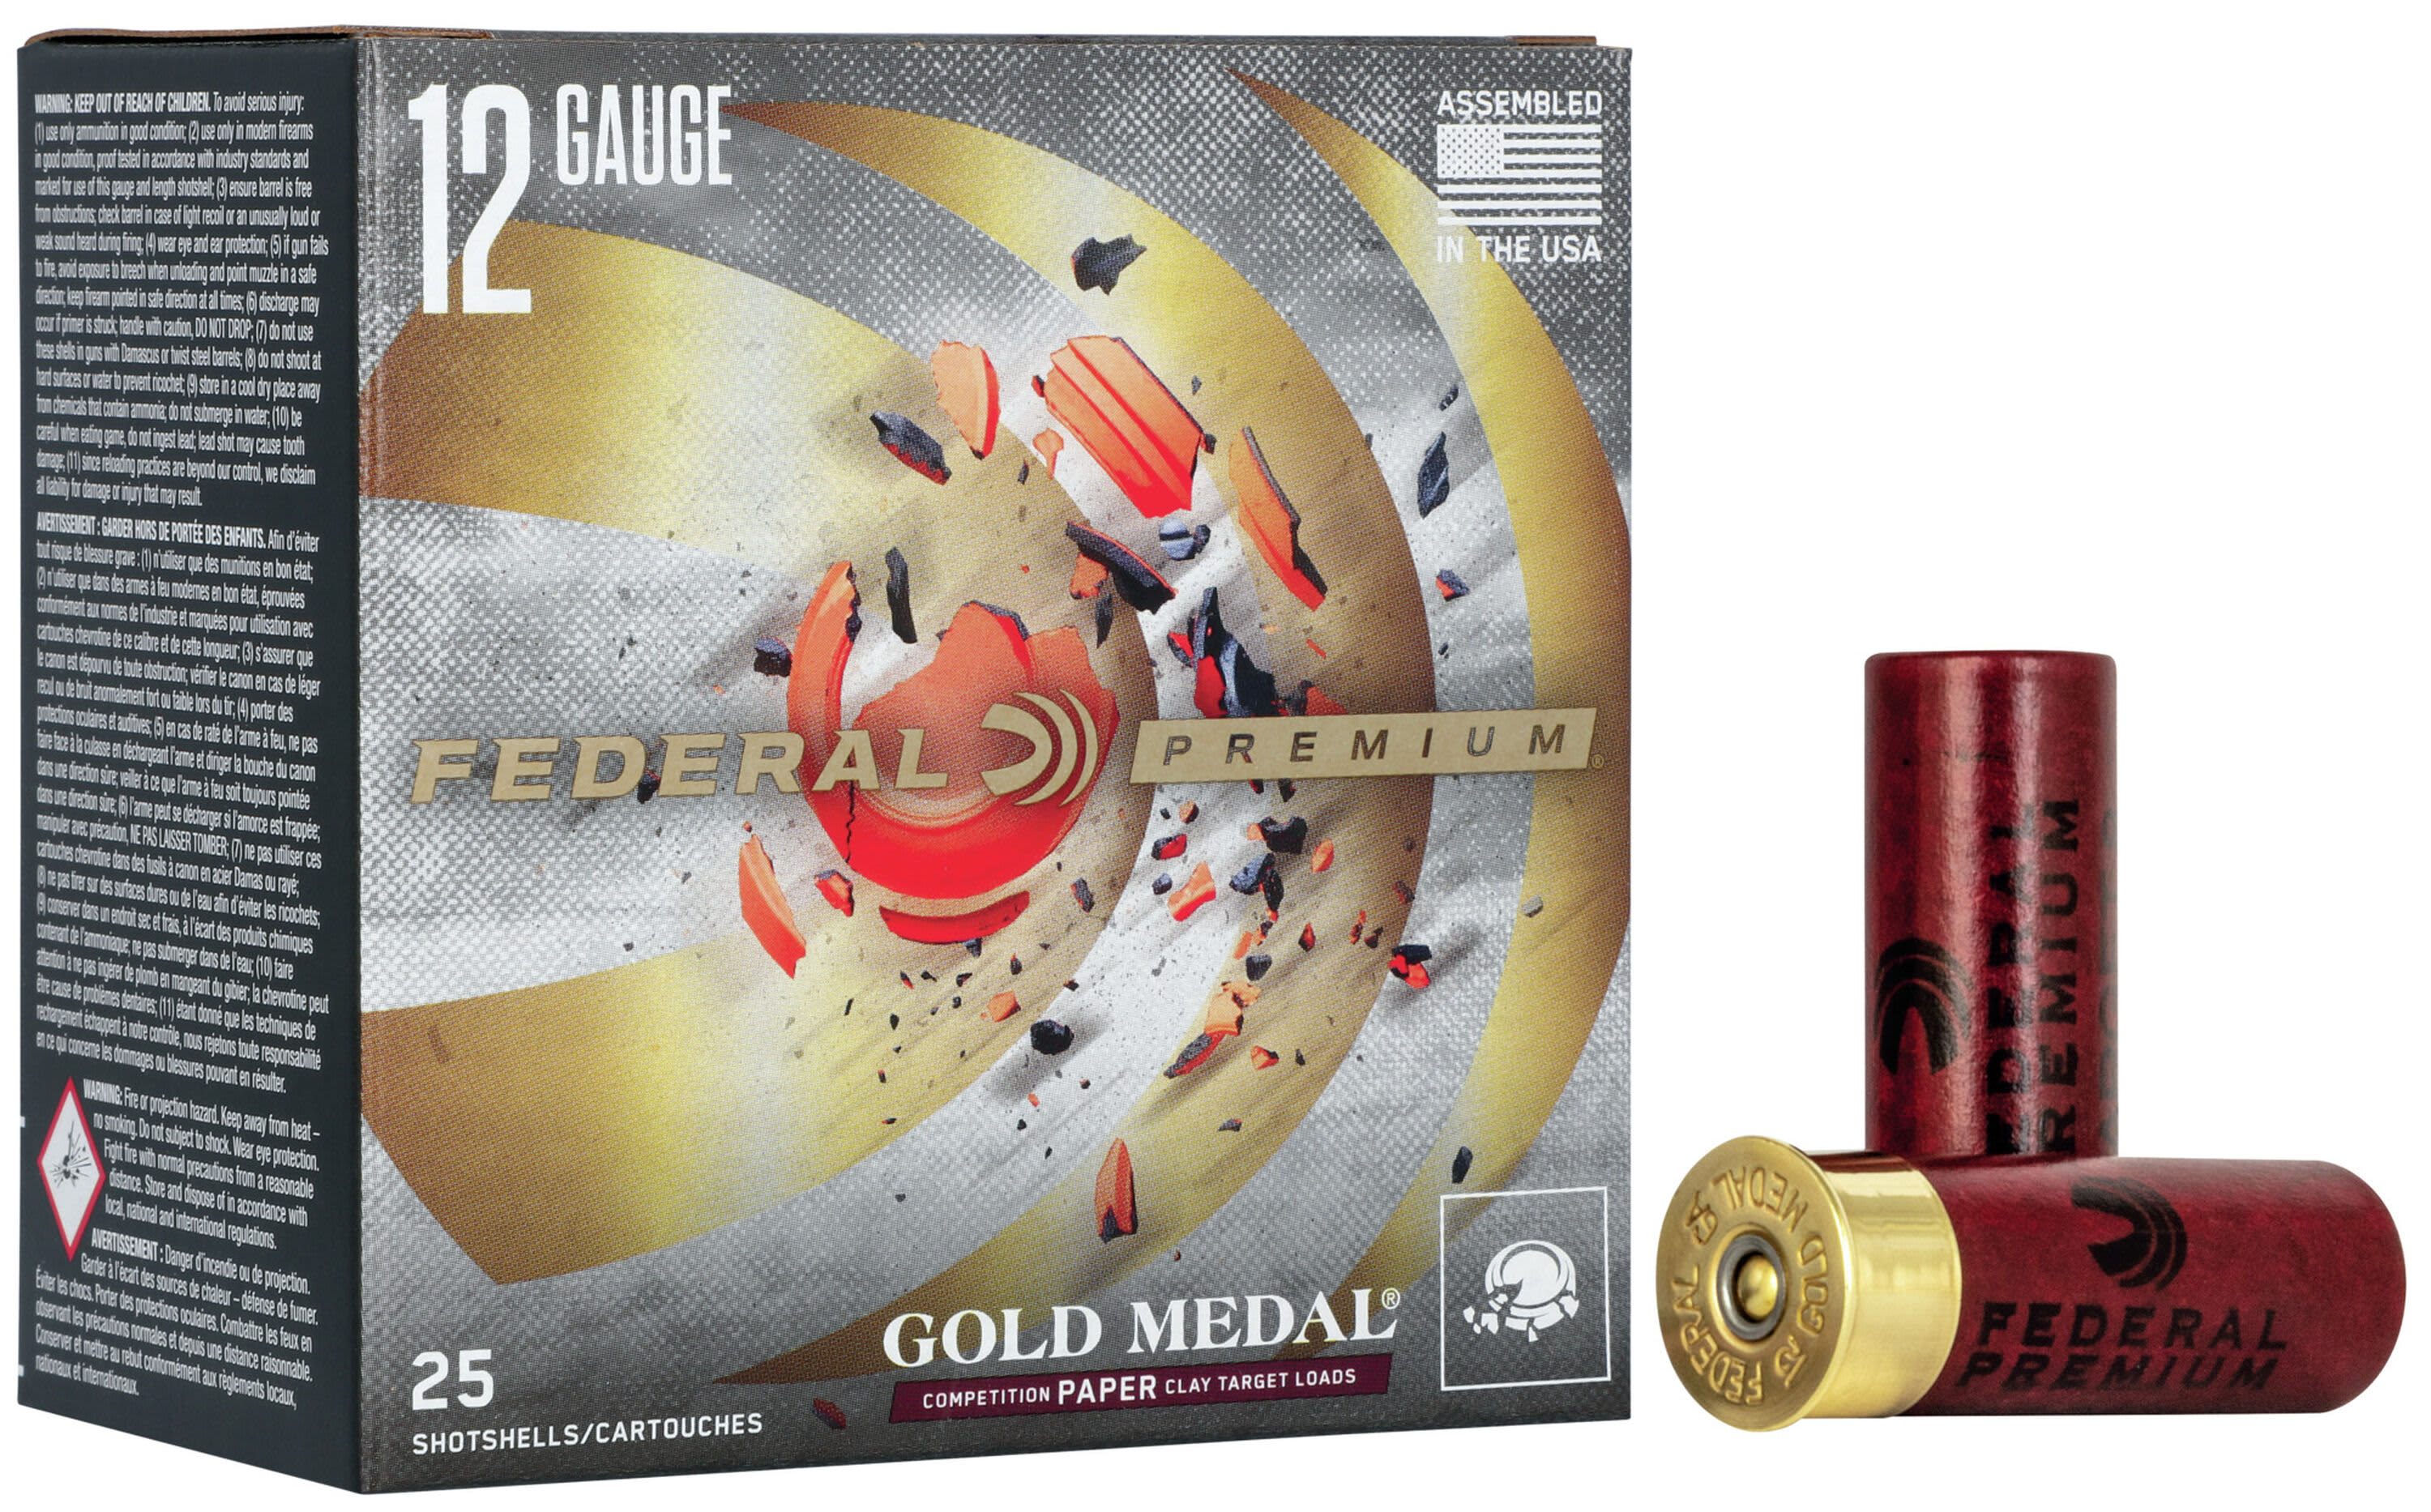 Federal Classic Hi-Brass, 12 Gauge, 2 3/4, 1 1/4 oz., Shotshells, 25  rounds - 99808, 12 Gauge Shells at Sportsman's Guide